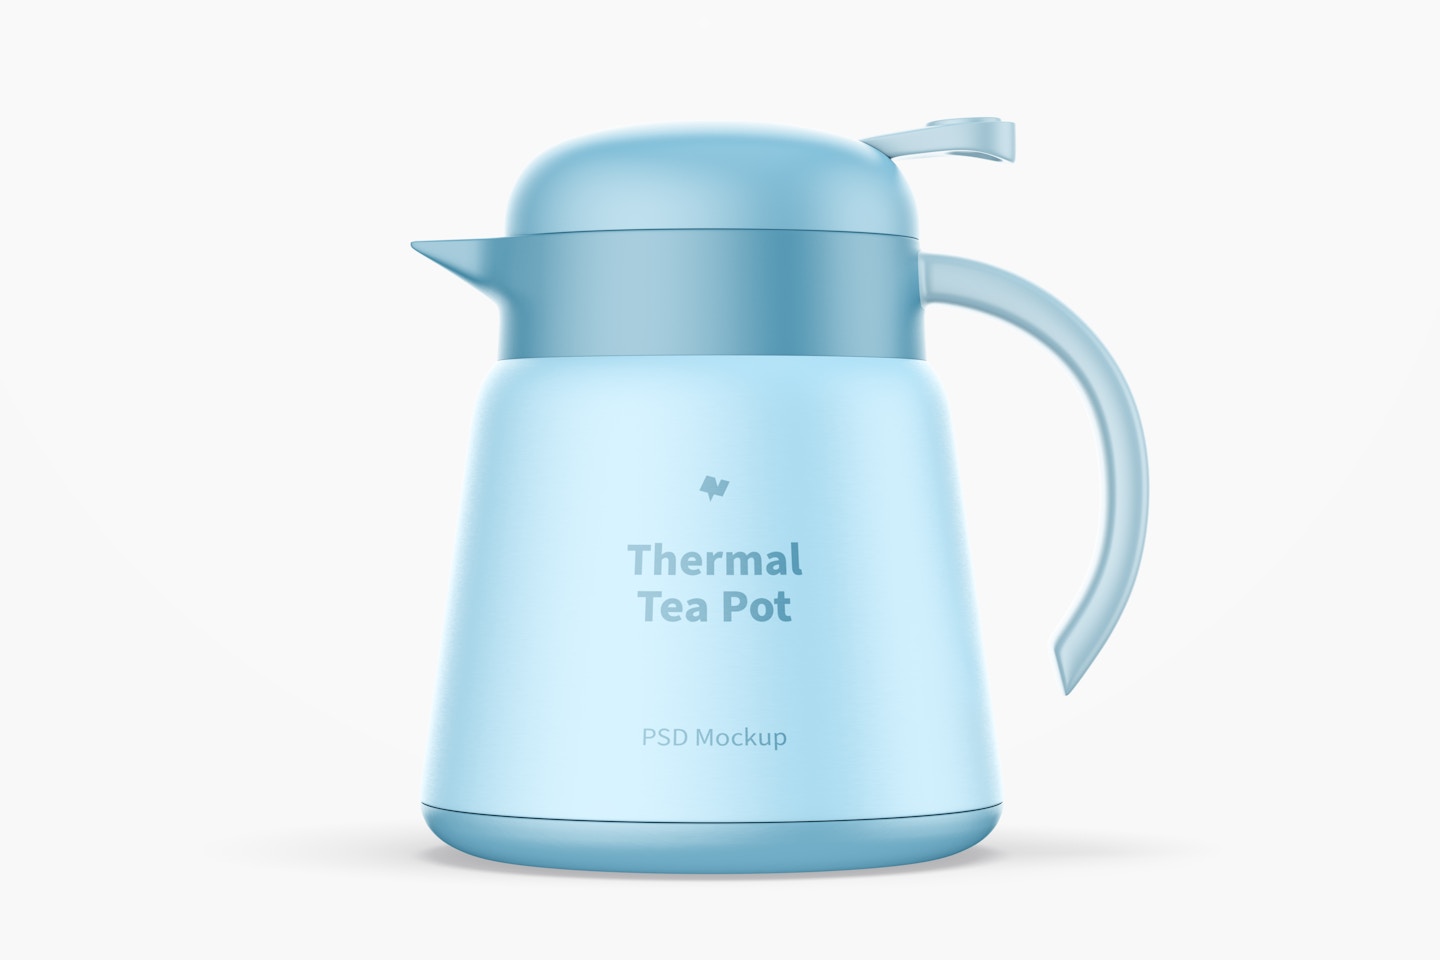 Thermal Tea Pot Mockup, Front View